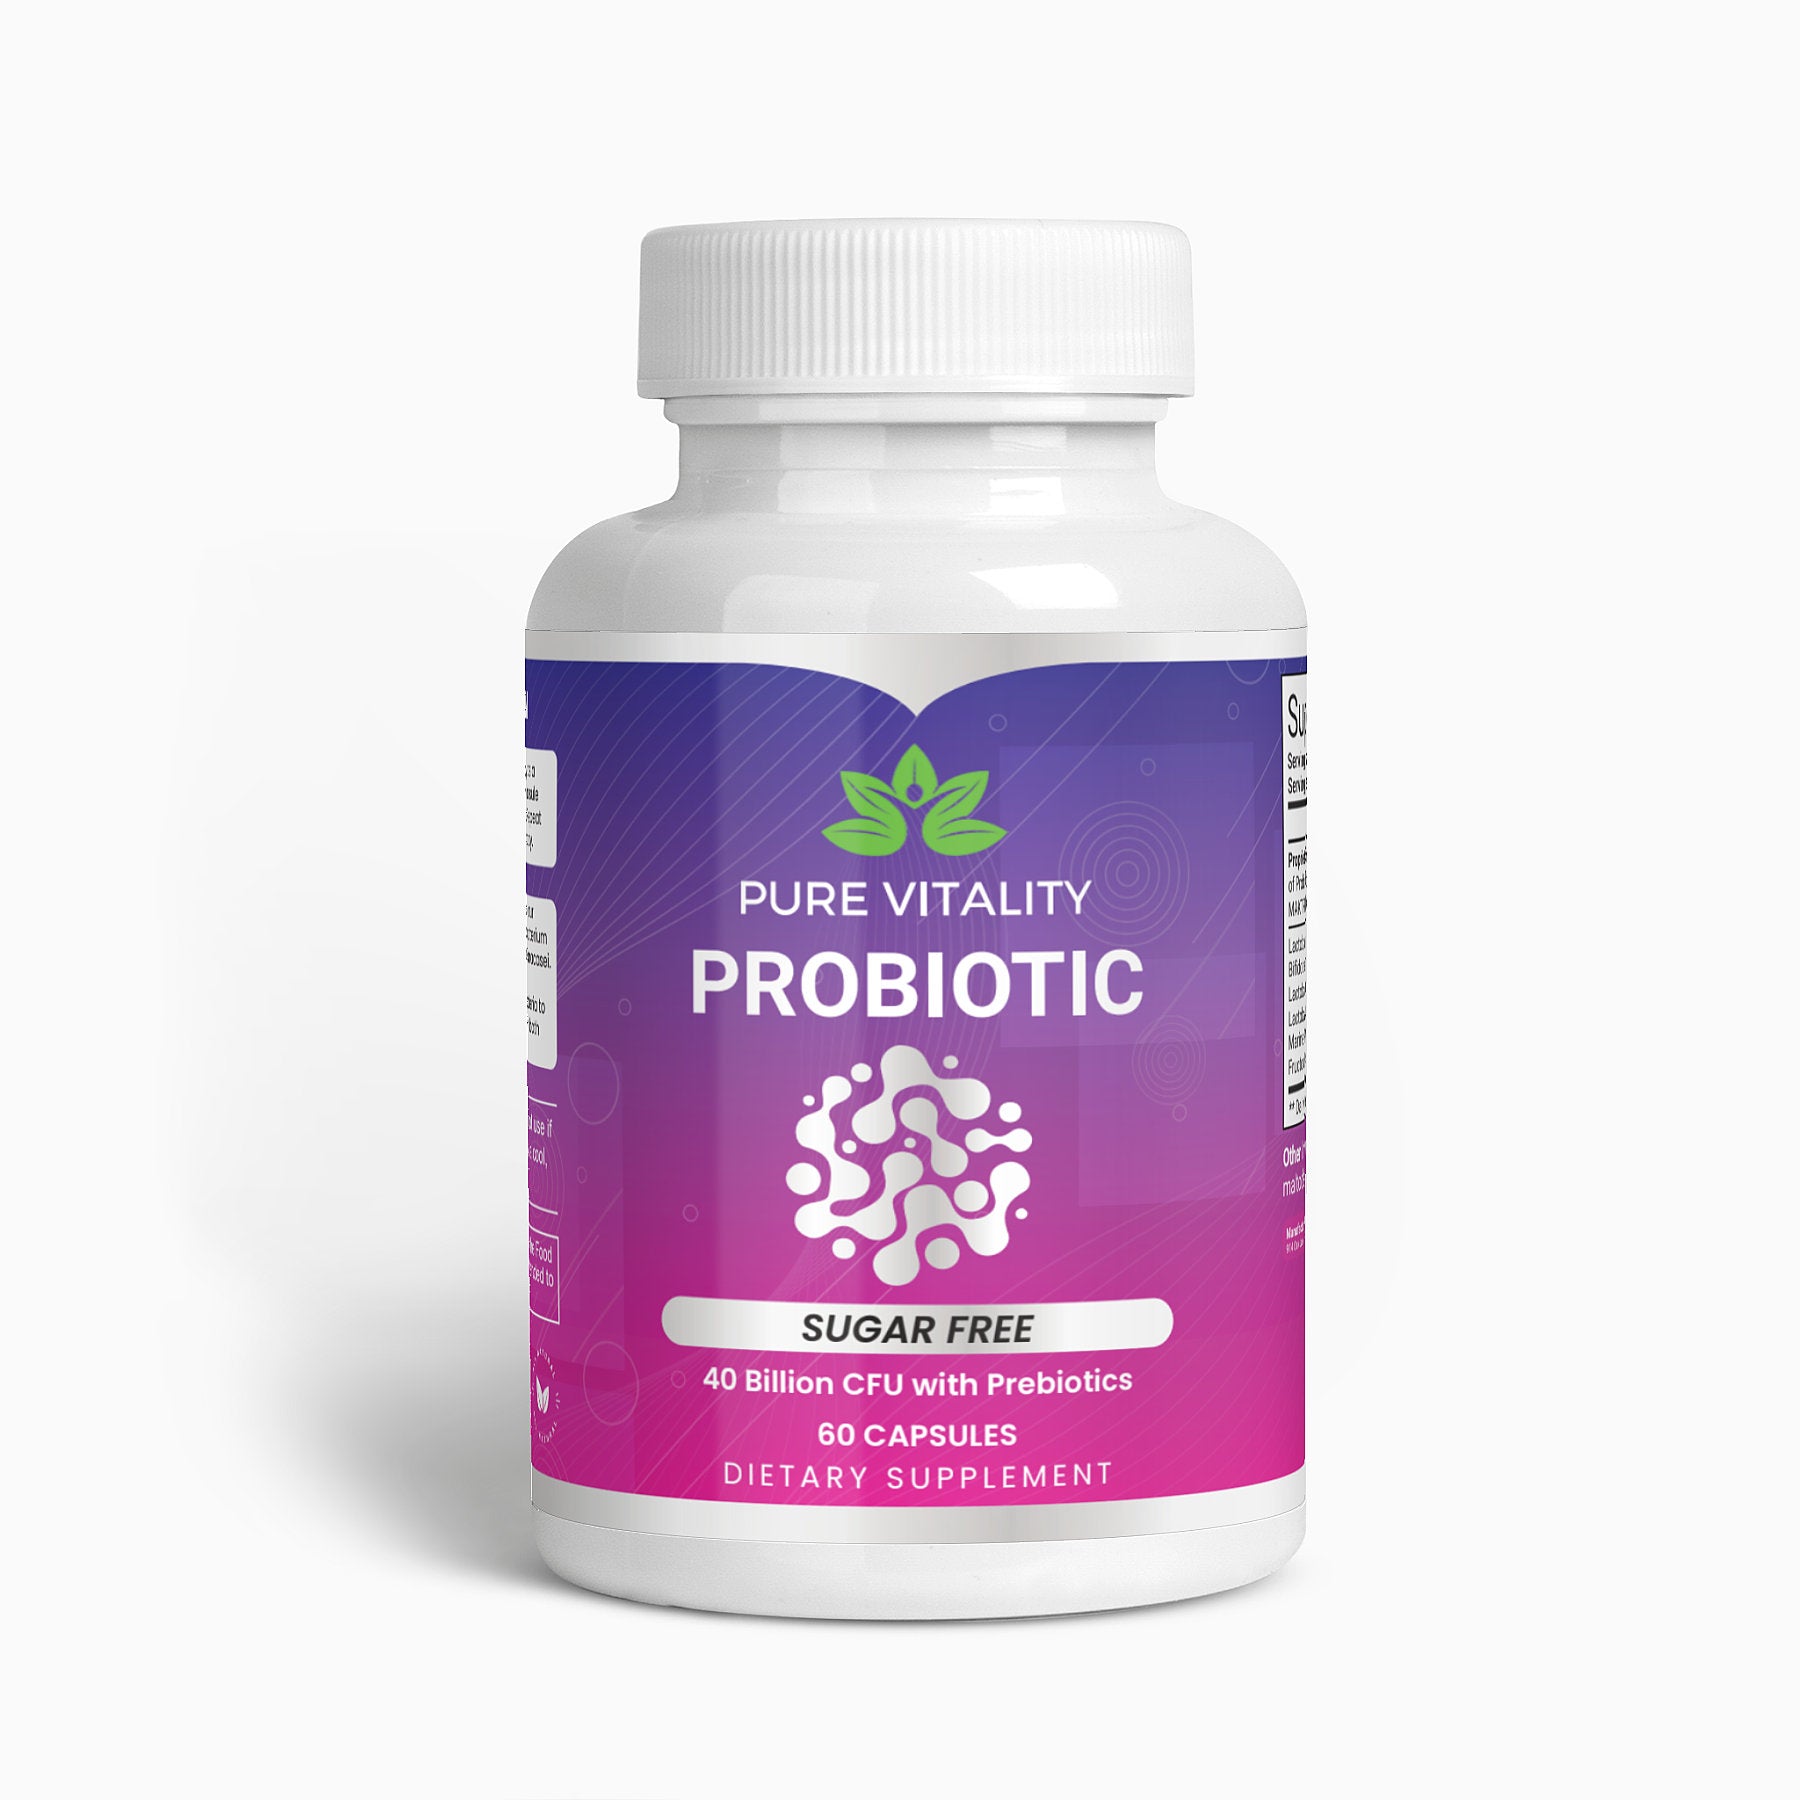 Probiotic 40 Billion CFU with Prebiotics